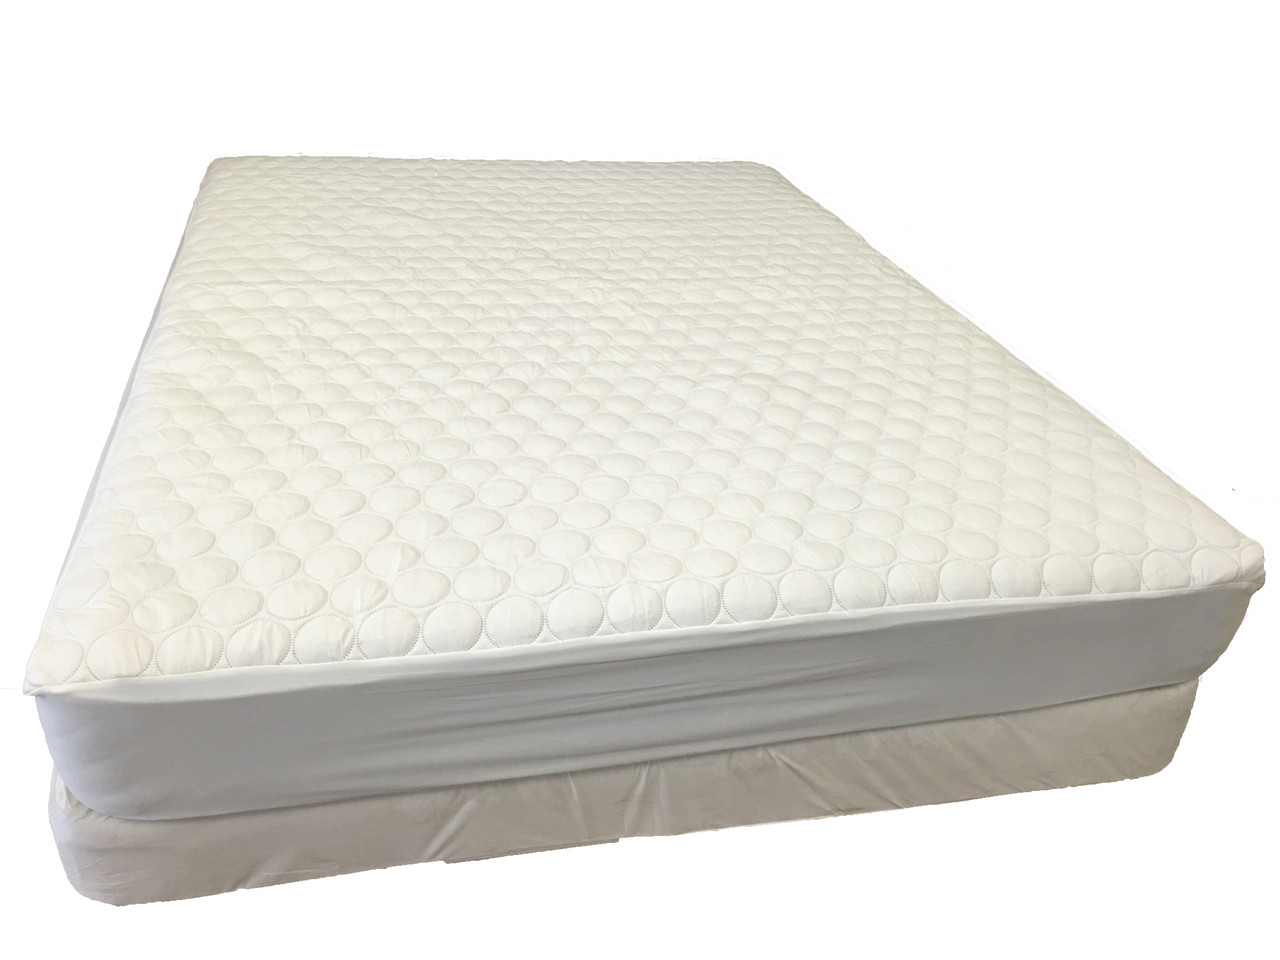 blu comfort mattress protector